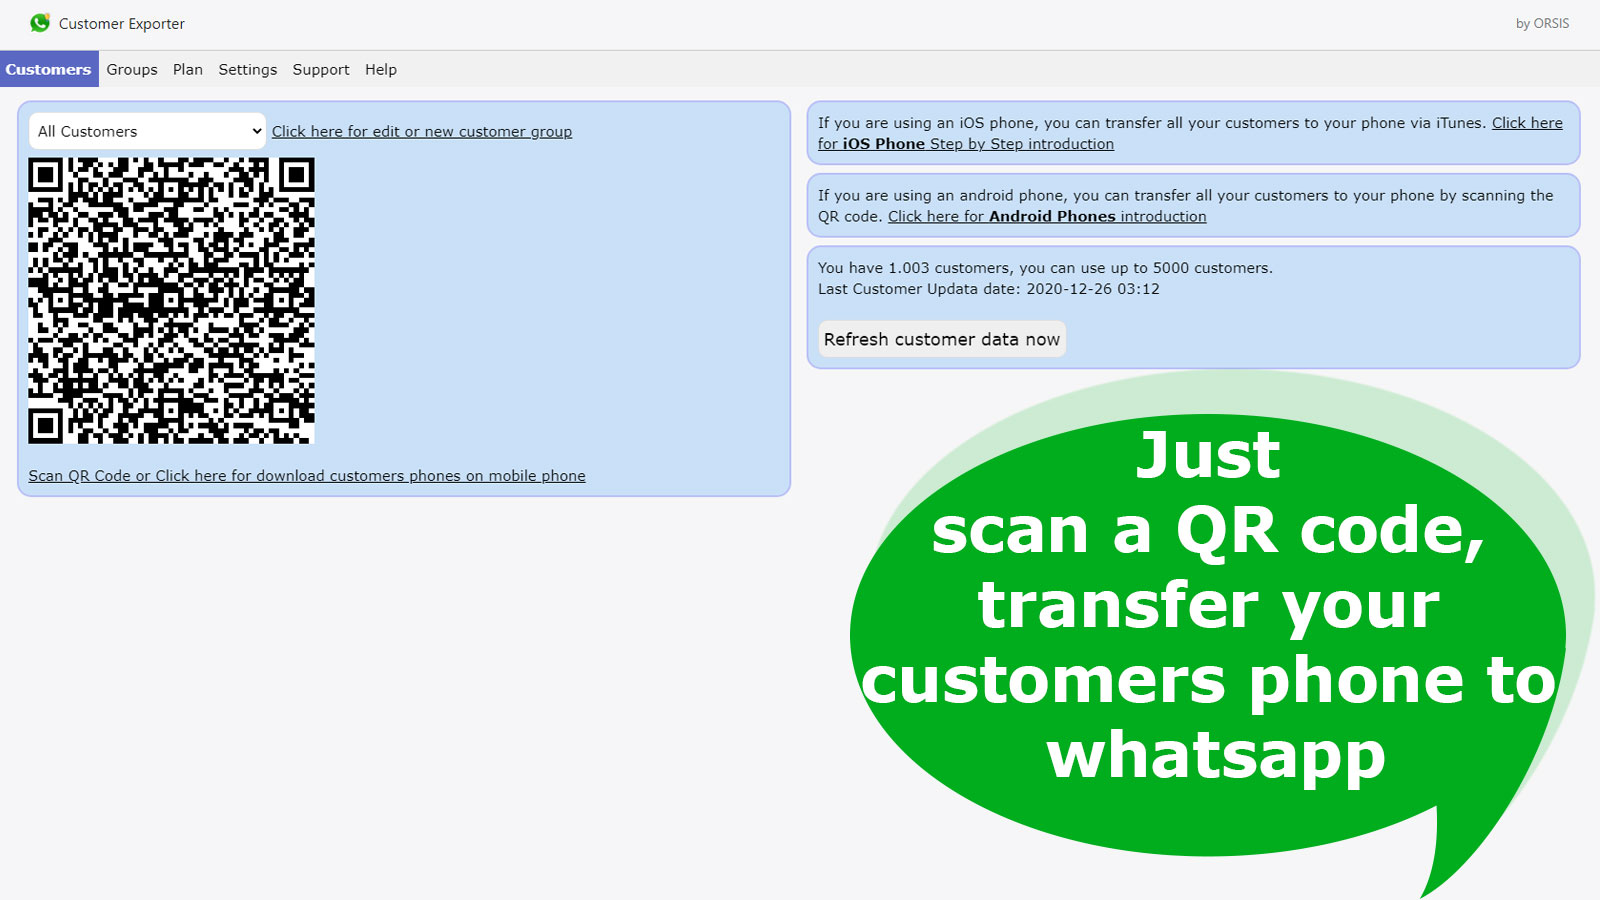 Solo escanea un código QR, transfiere el teléfono de tus clientes a whatsapp